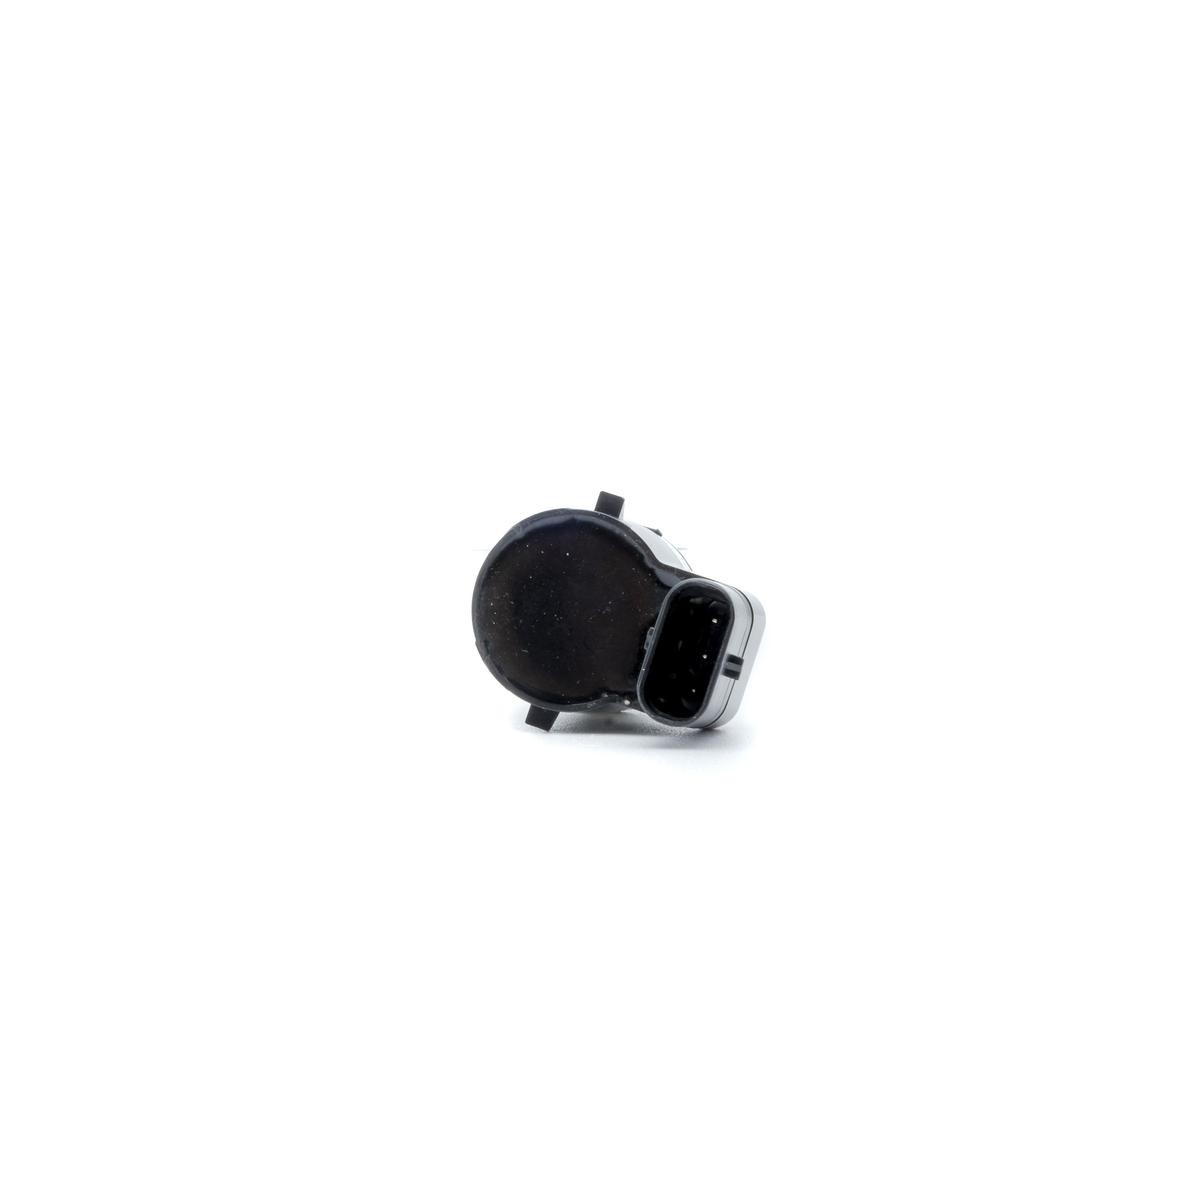 EINPARTS EPPDC45 Parking sensor Front, Rear, black, Ultrasonic Sensor